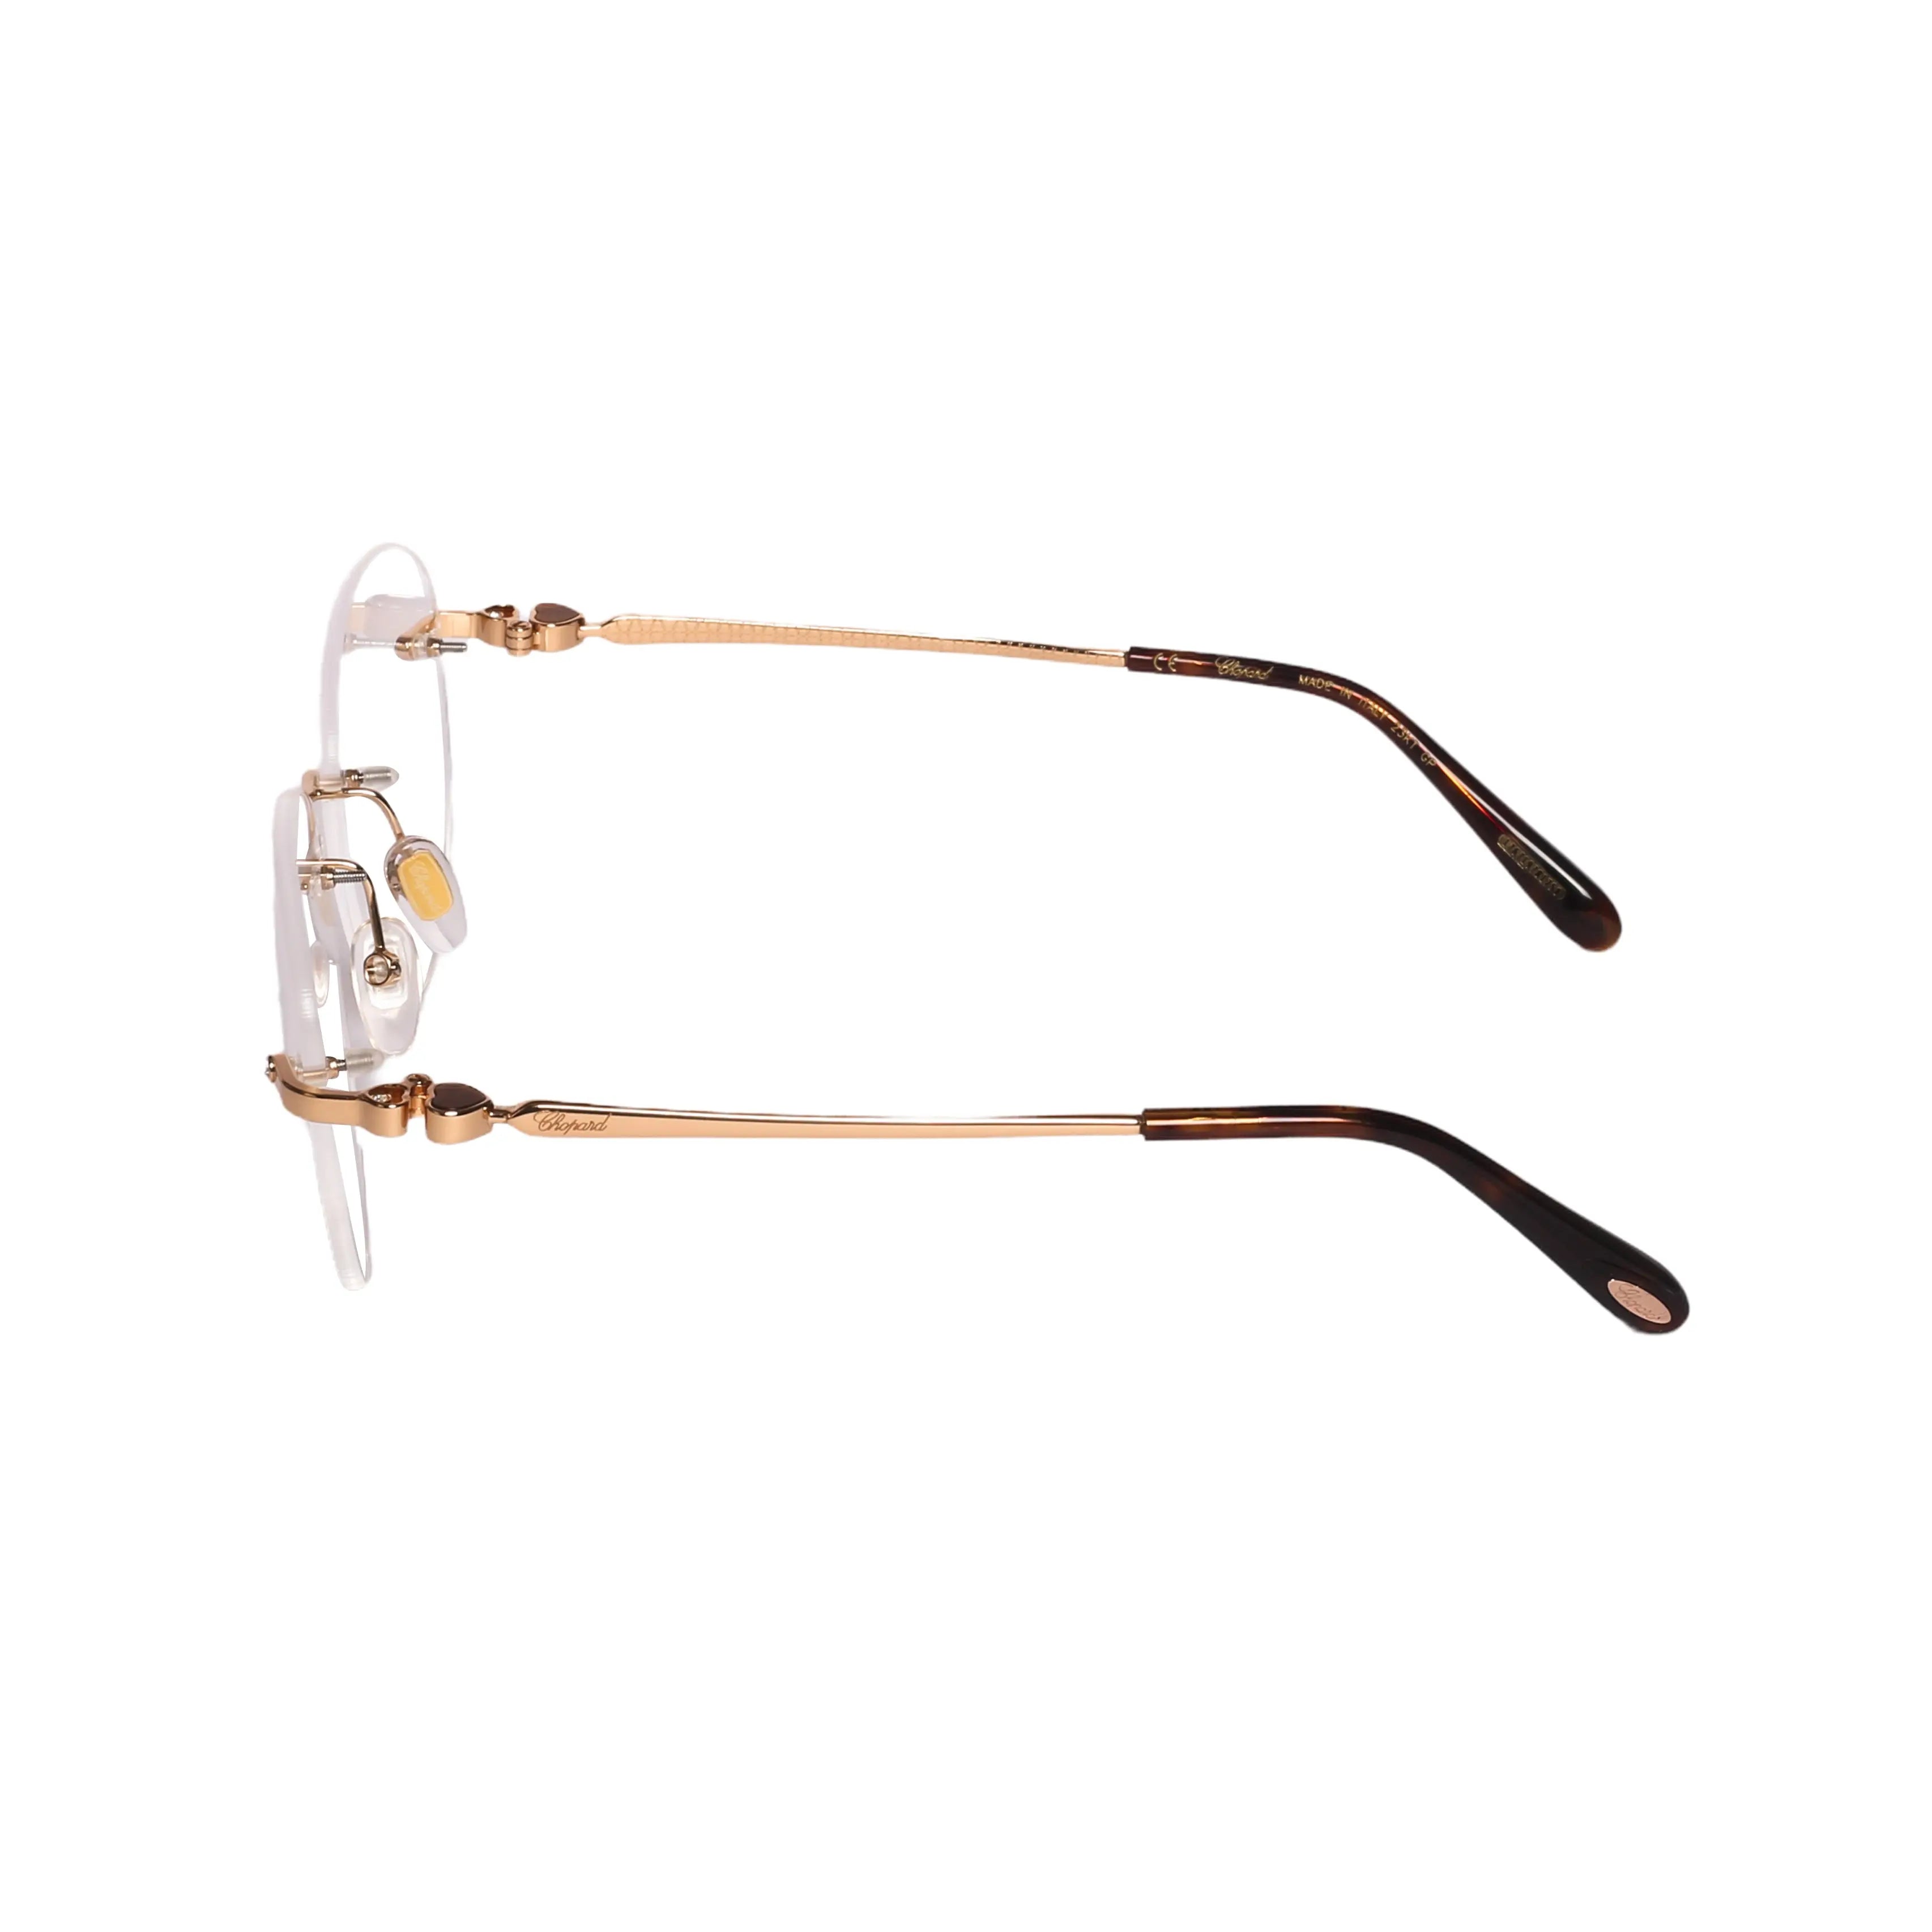 CHOPARD-VCHD 79S-54-300 Eyeglasses - Premium Eyeglasses from CHOPARD - Just Rs. 41900! Shop now at Laxmi Opticians